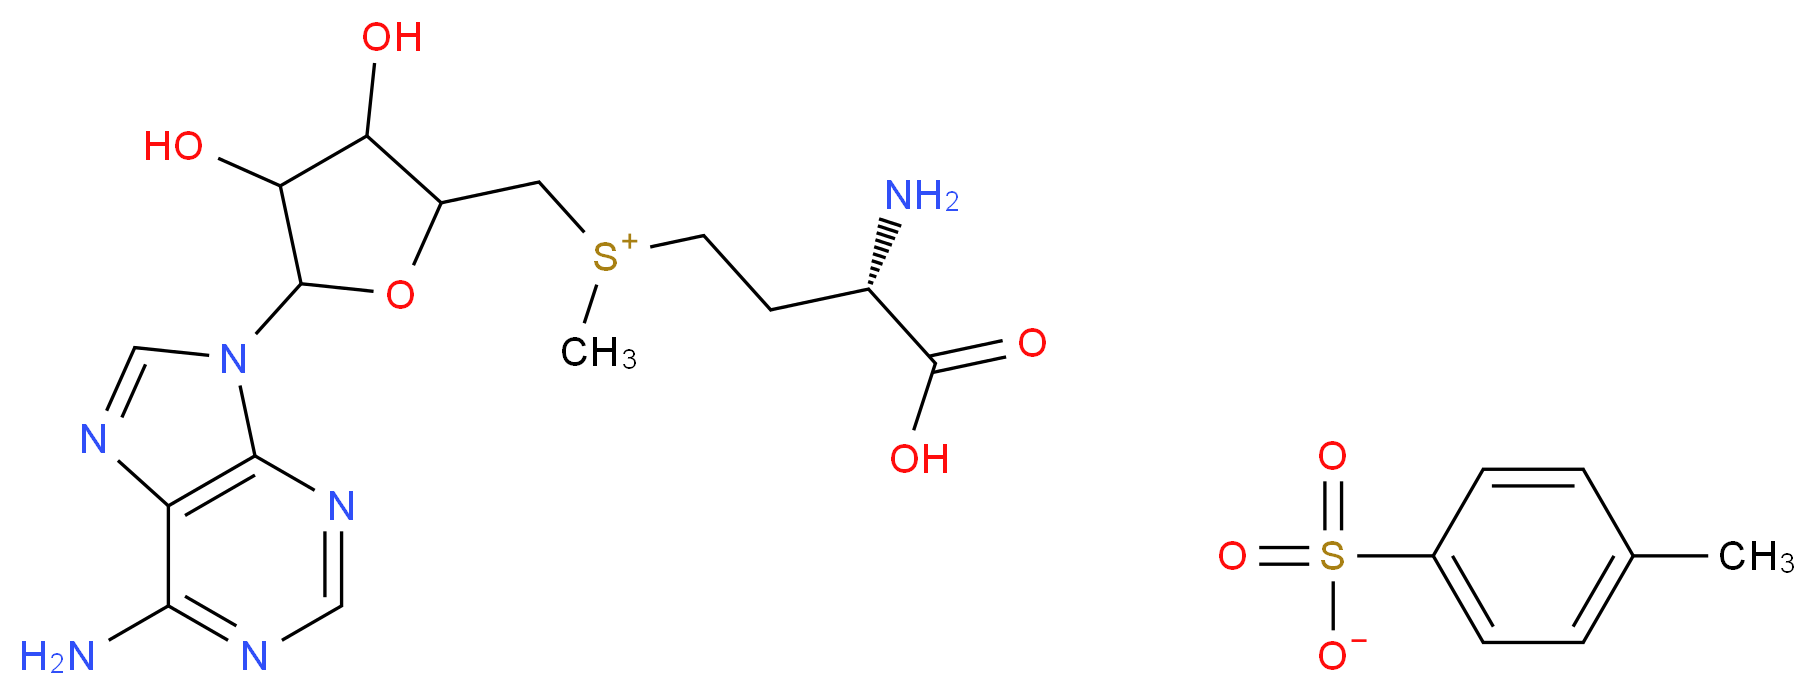 S-ADENOSYL-L-METHIONINE SULFATE p-TOLUENESULFONATE SALT_Molecular_structure_CAS_485-80-3)